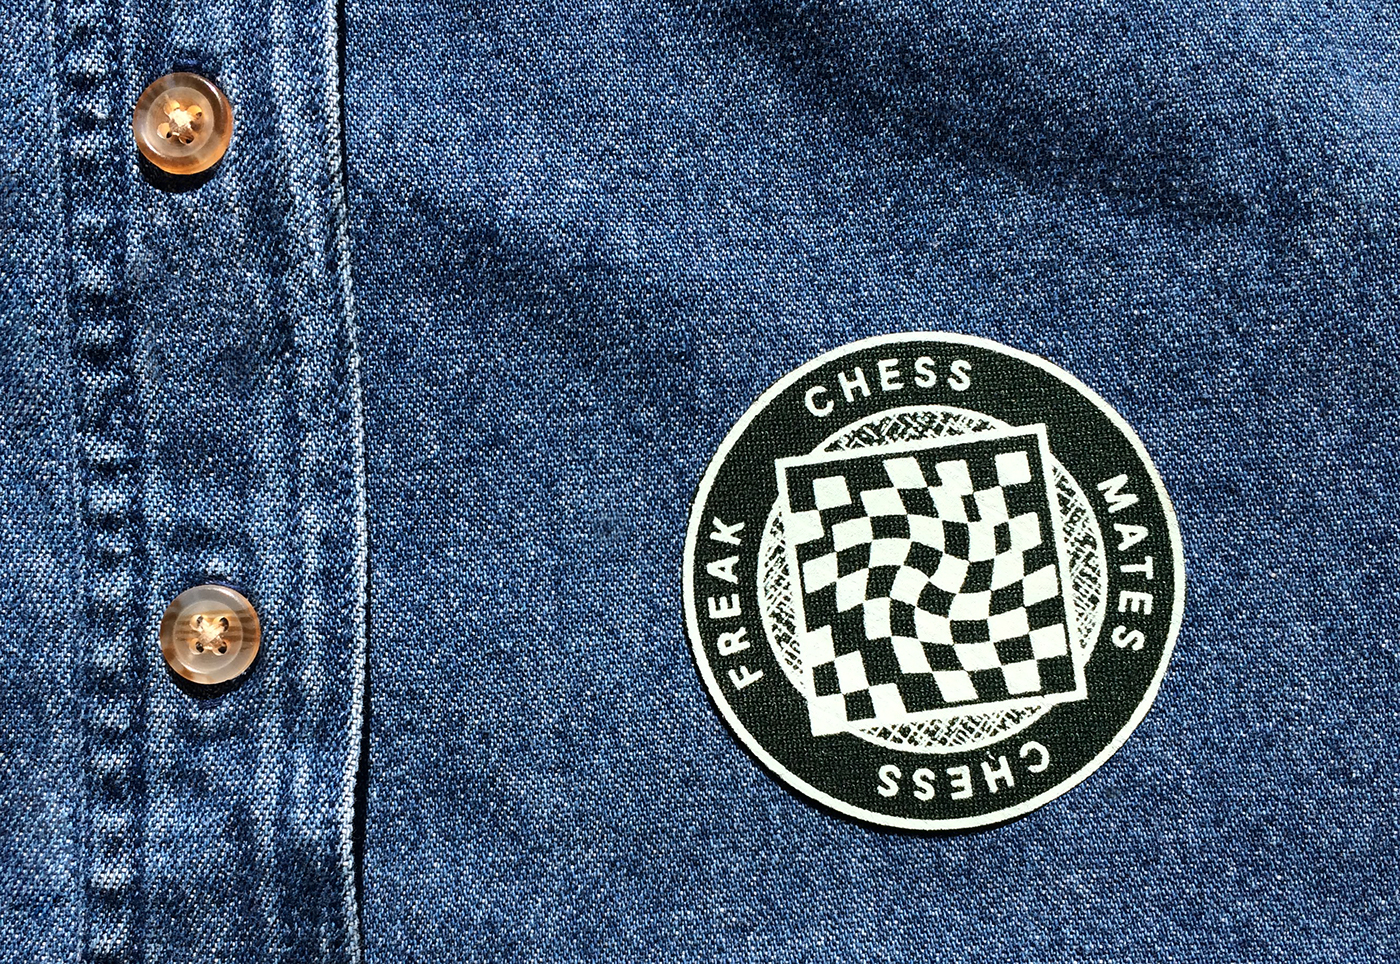 patches silkscreen chess Montreal